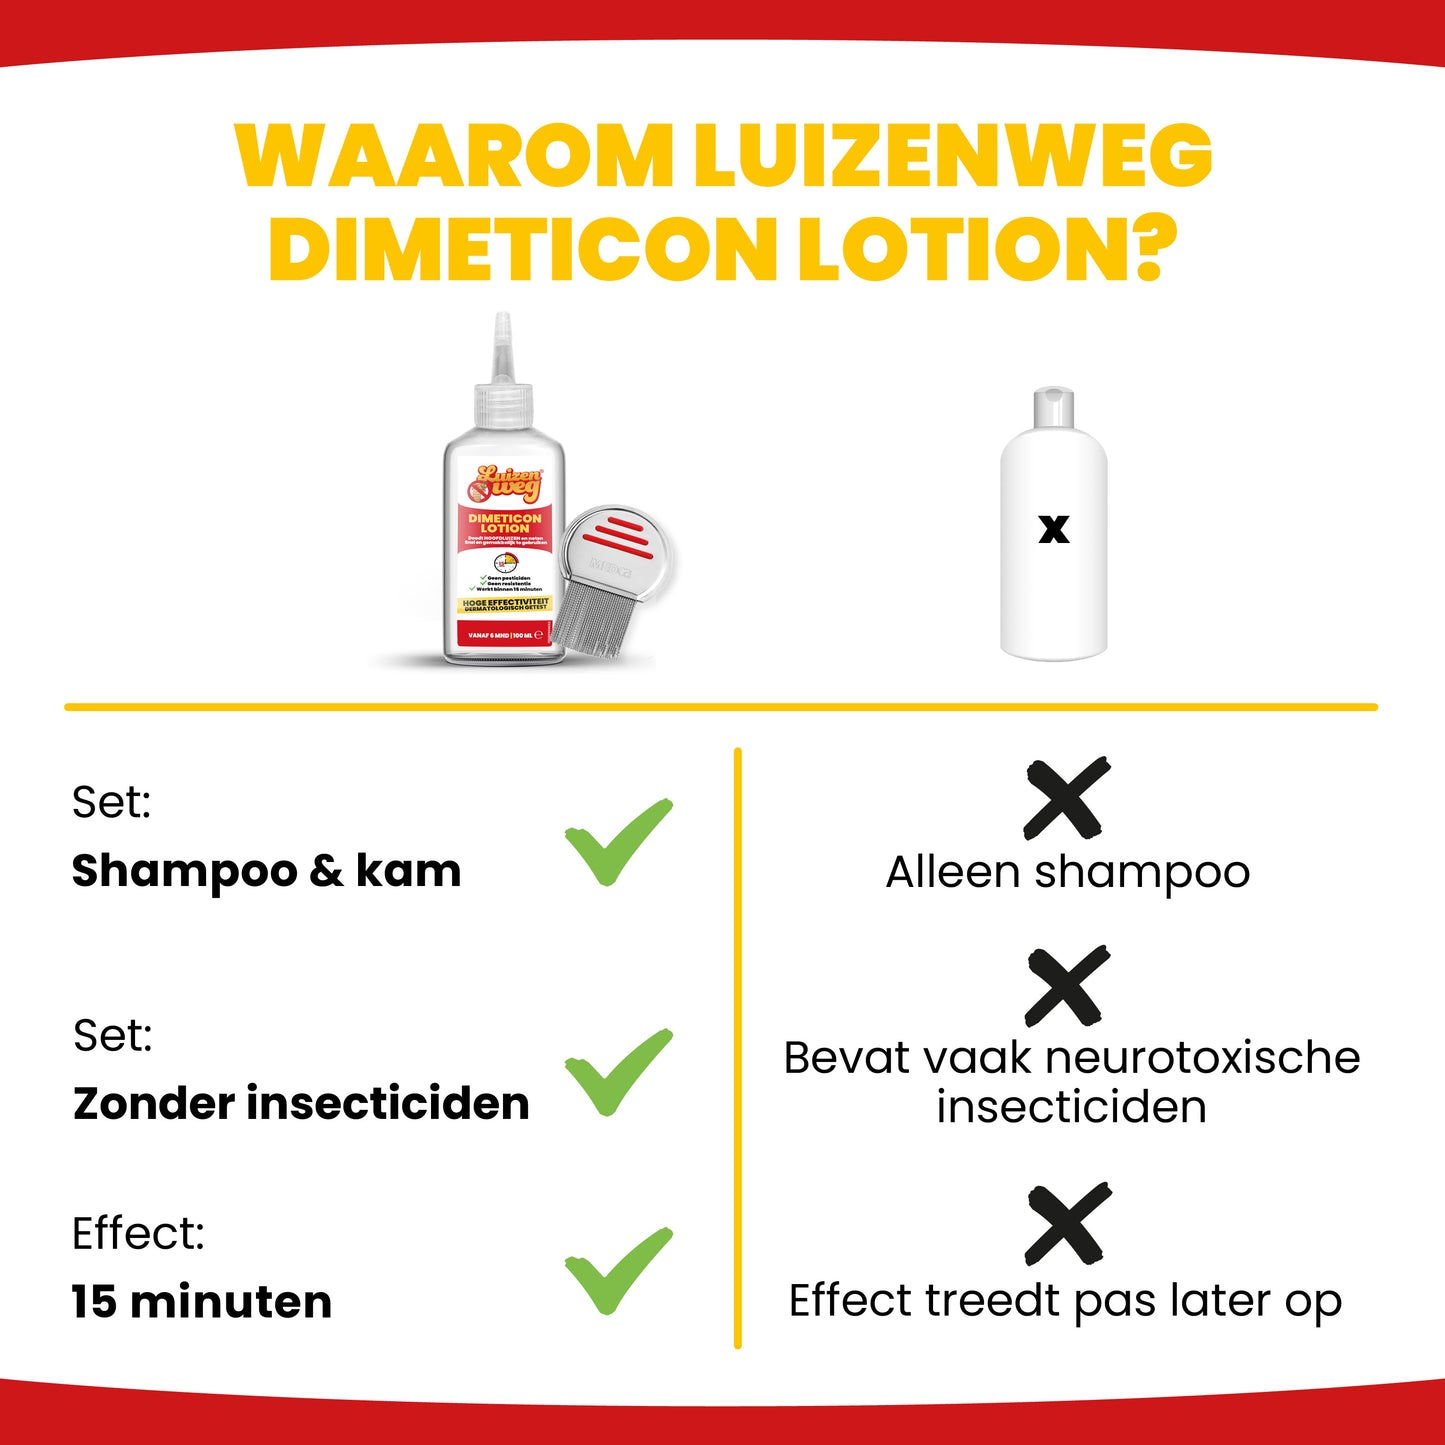 Duo-verpakking dimeticon lotion 2 x 100 ml.